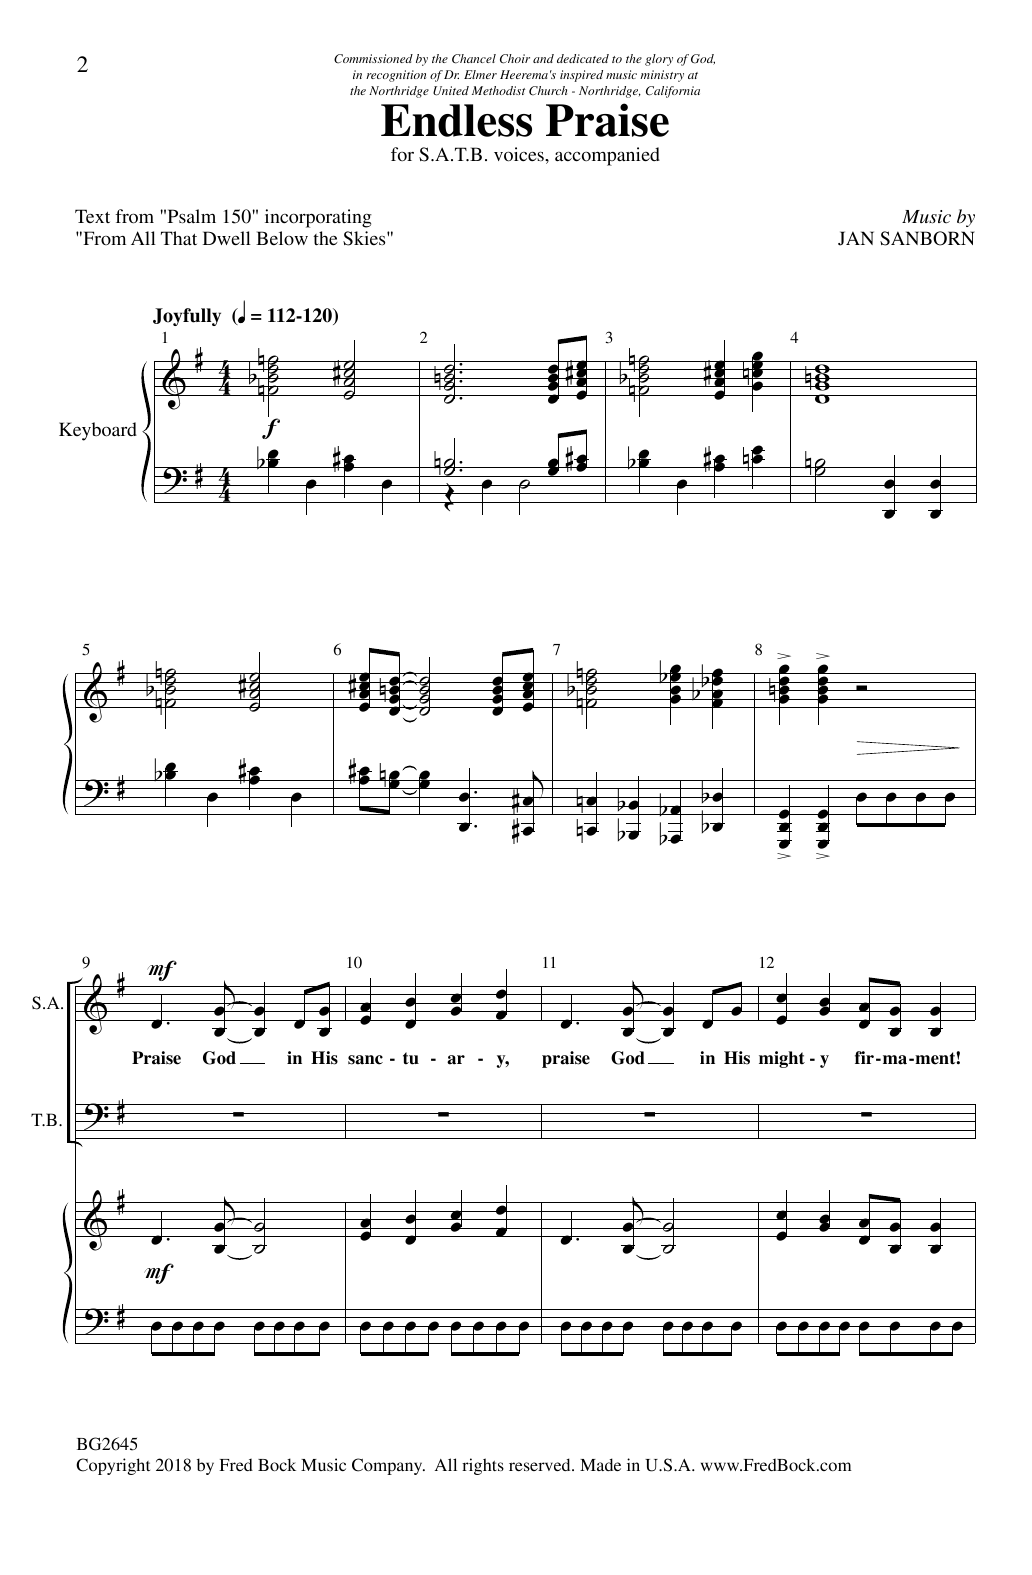 Jan Sanborn Endless Praise Sheet Music Notes & Chords for SATB Choir - Download or Print PDF